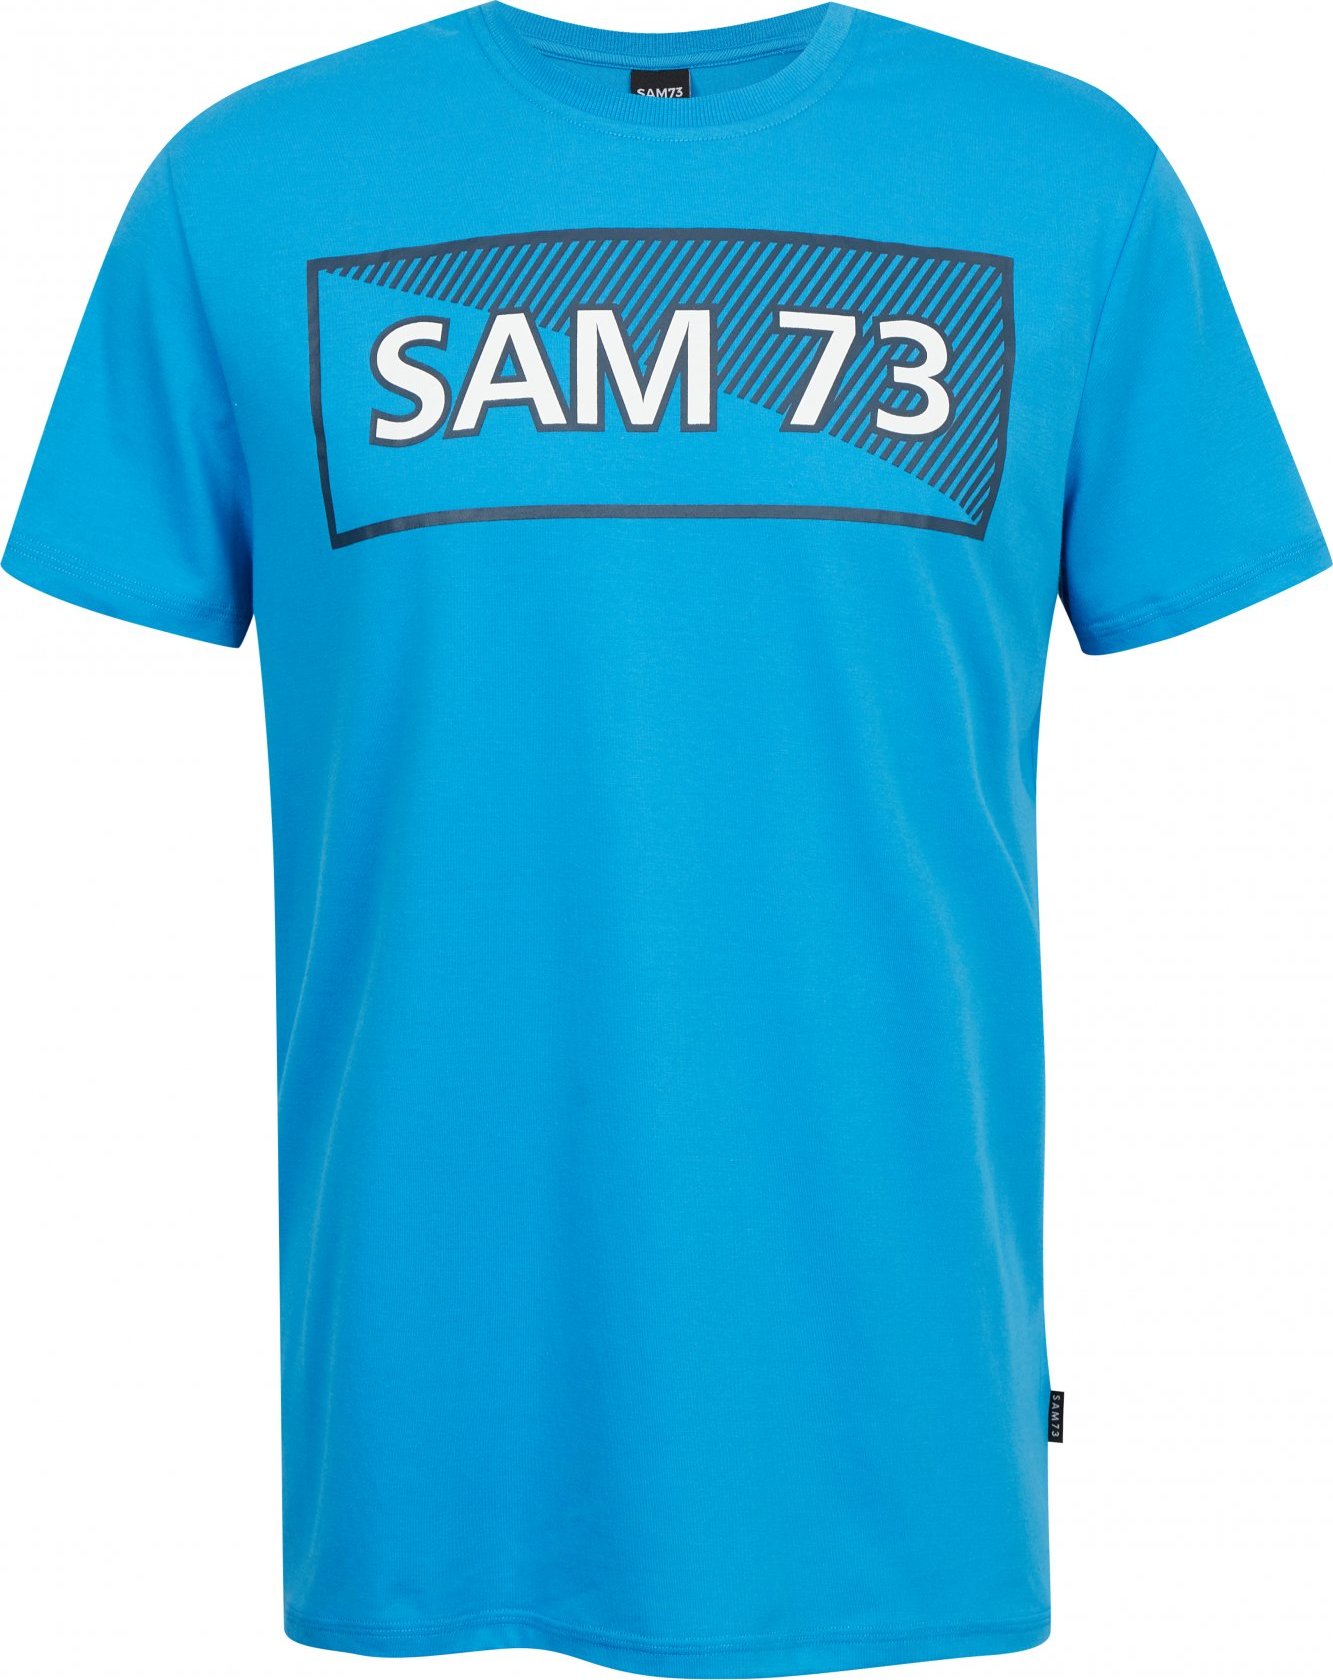 Pánské triko SAM73 fenri modré Velikost: S